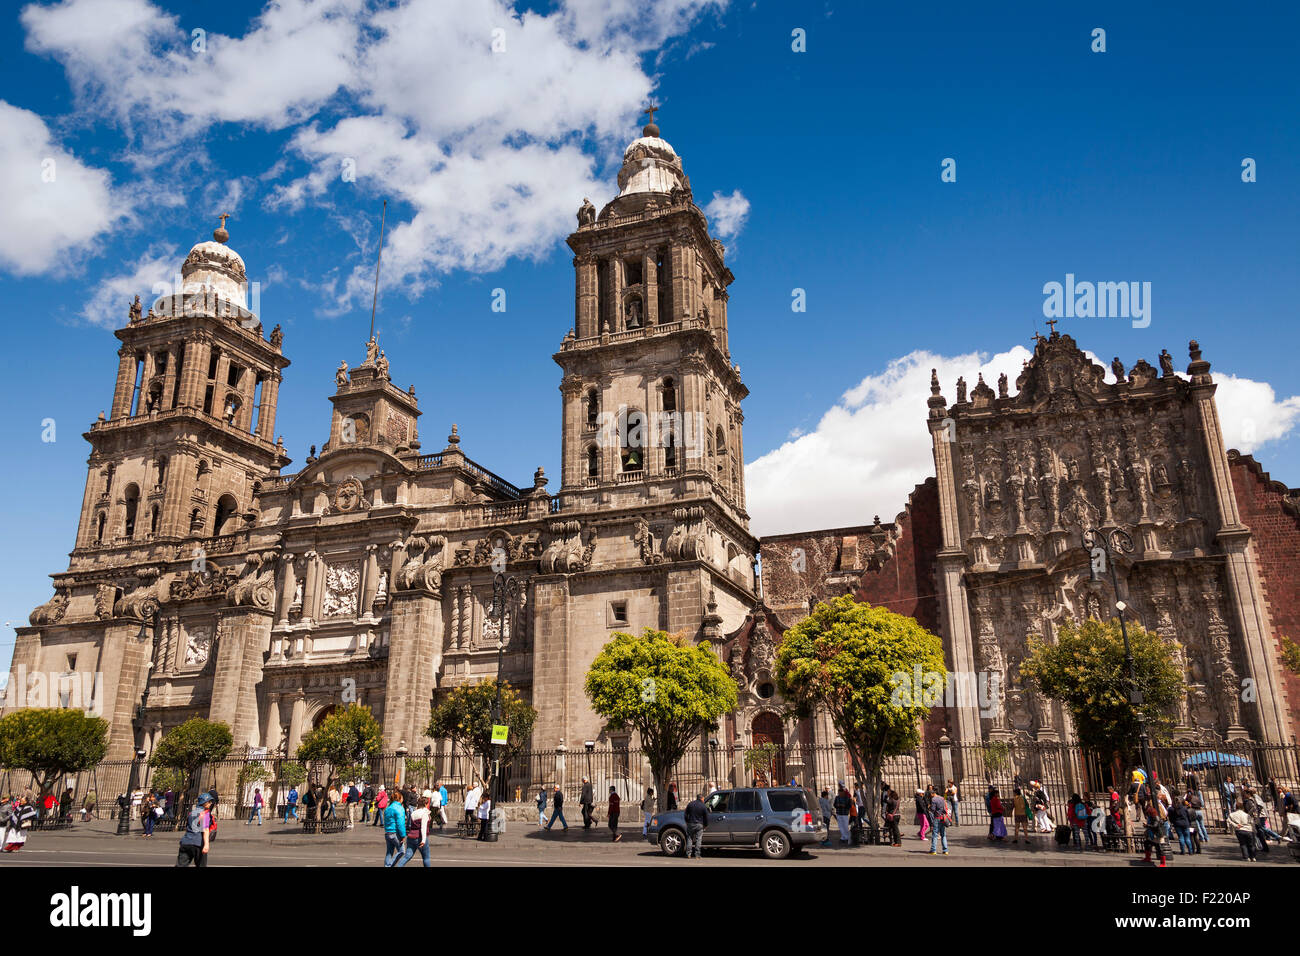 Metropolitan Cathedral Catedral Metropolitana Asuncion de Maria Plaza de la Constitucion Zocalo square Mexico City DF Stock Photo